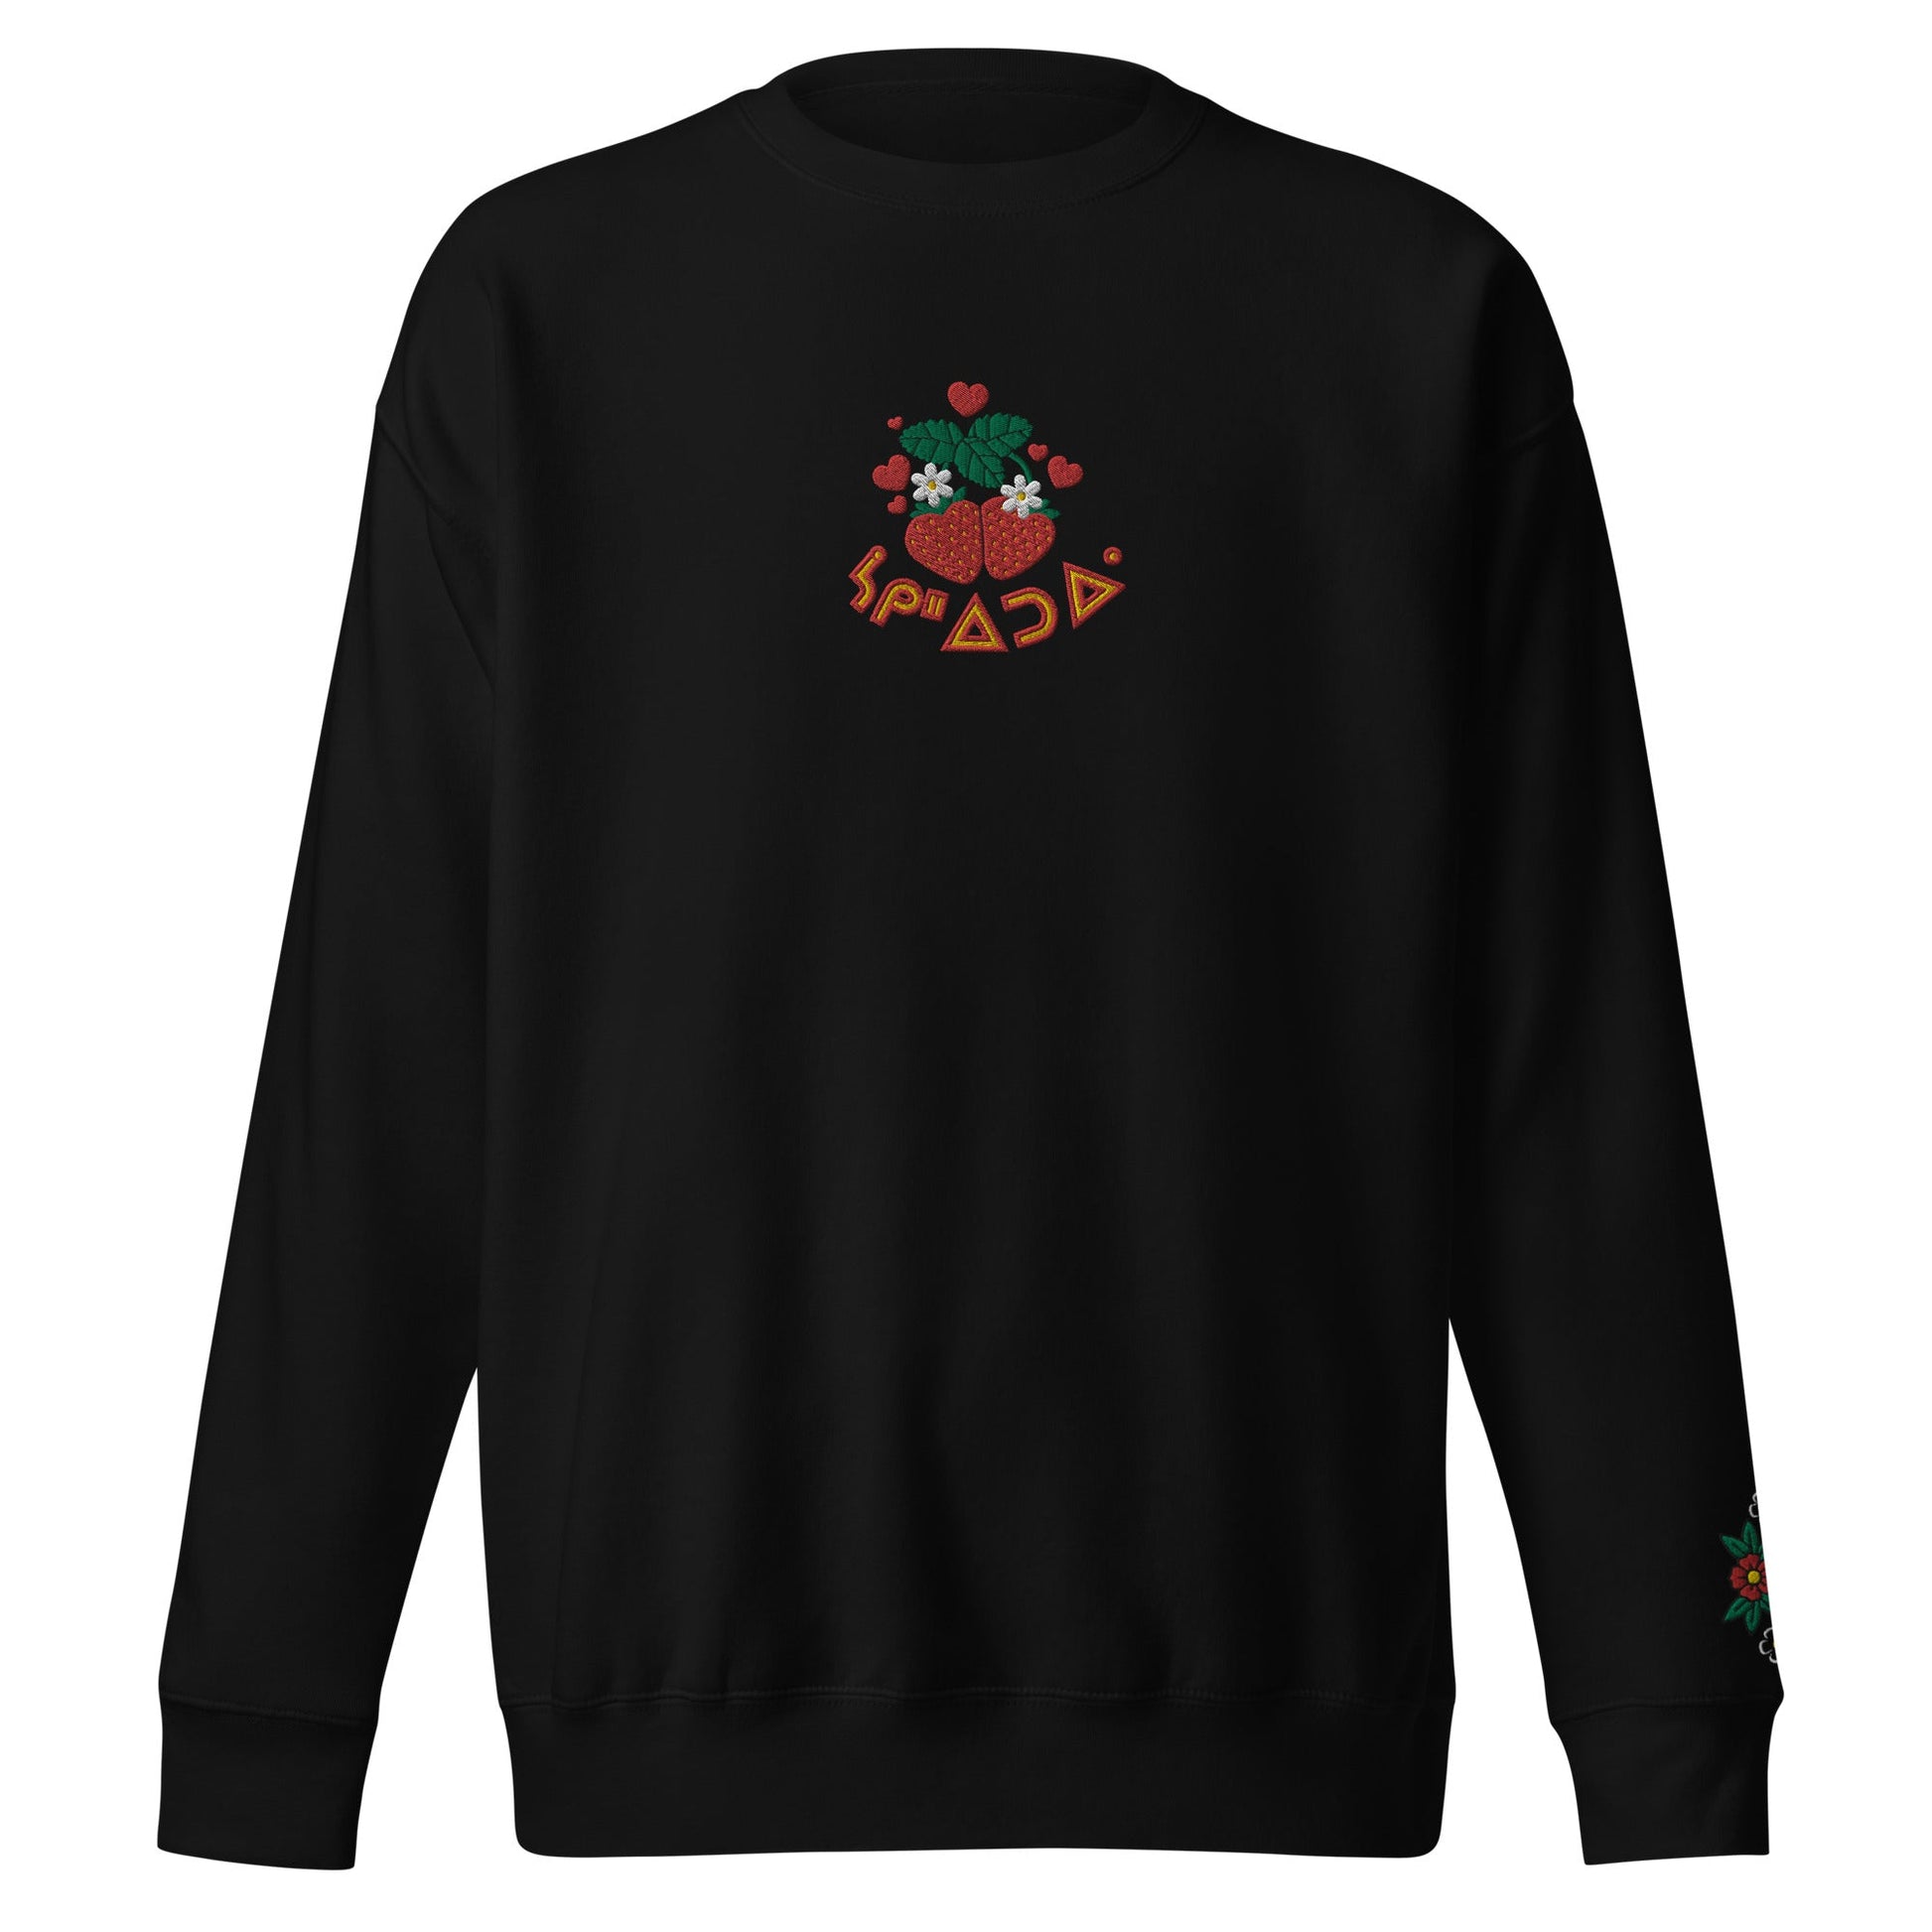 Cree Being In Love Embroidered Premium Sweatshirt - Nikikw Designs